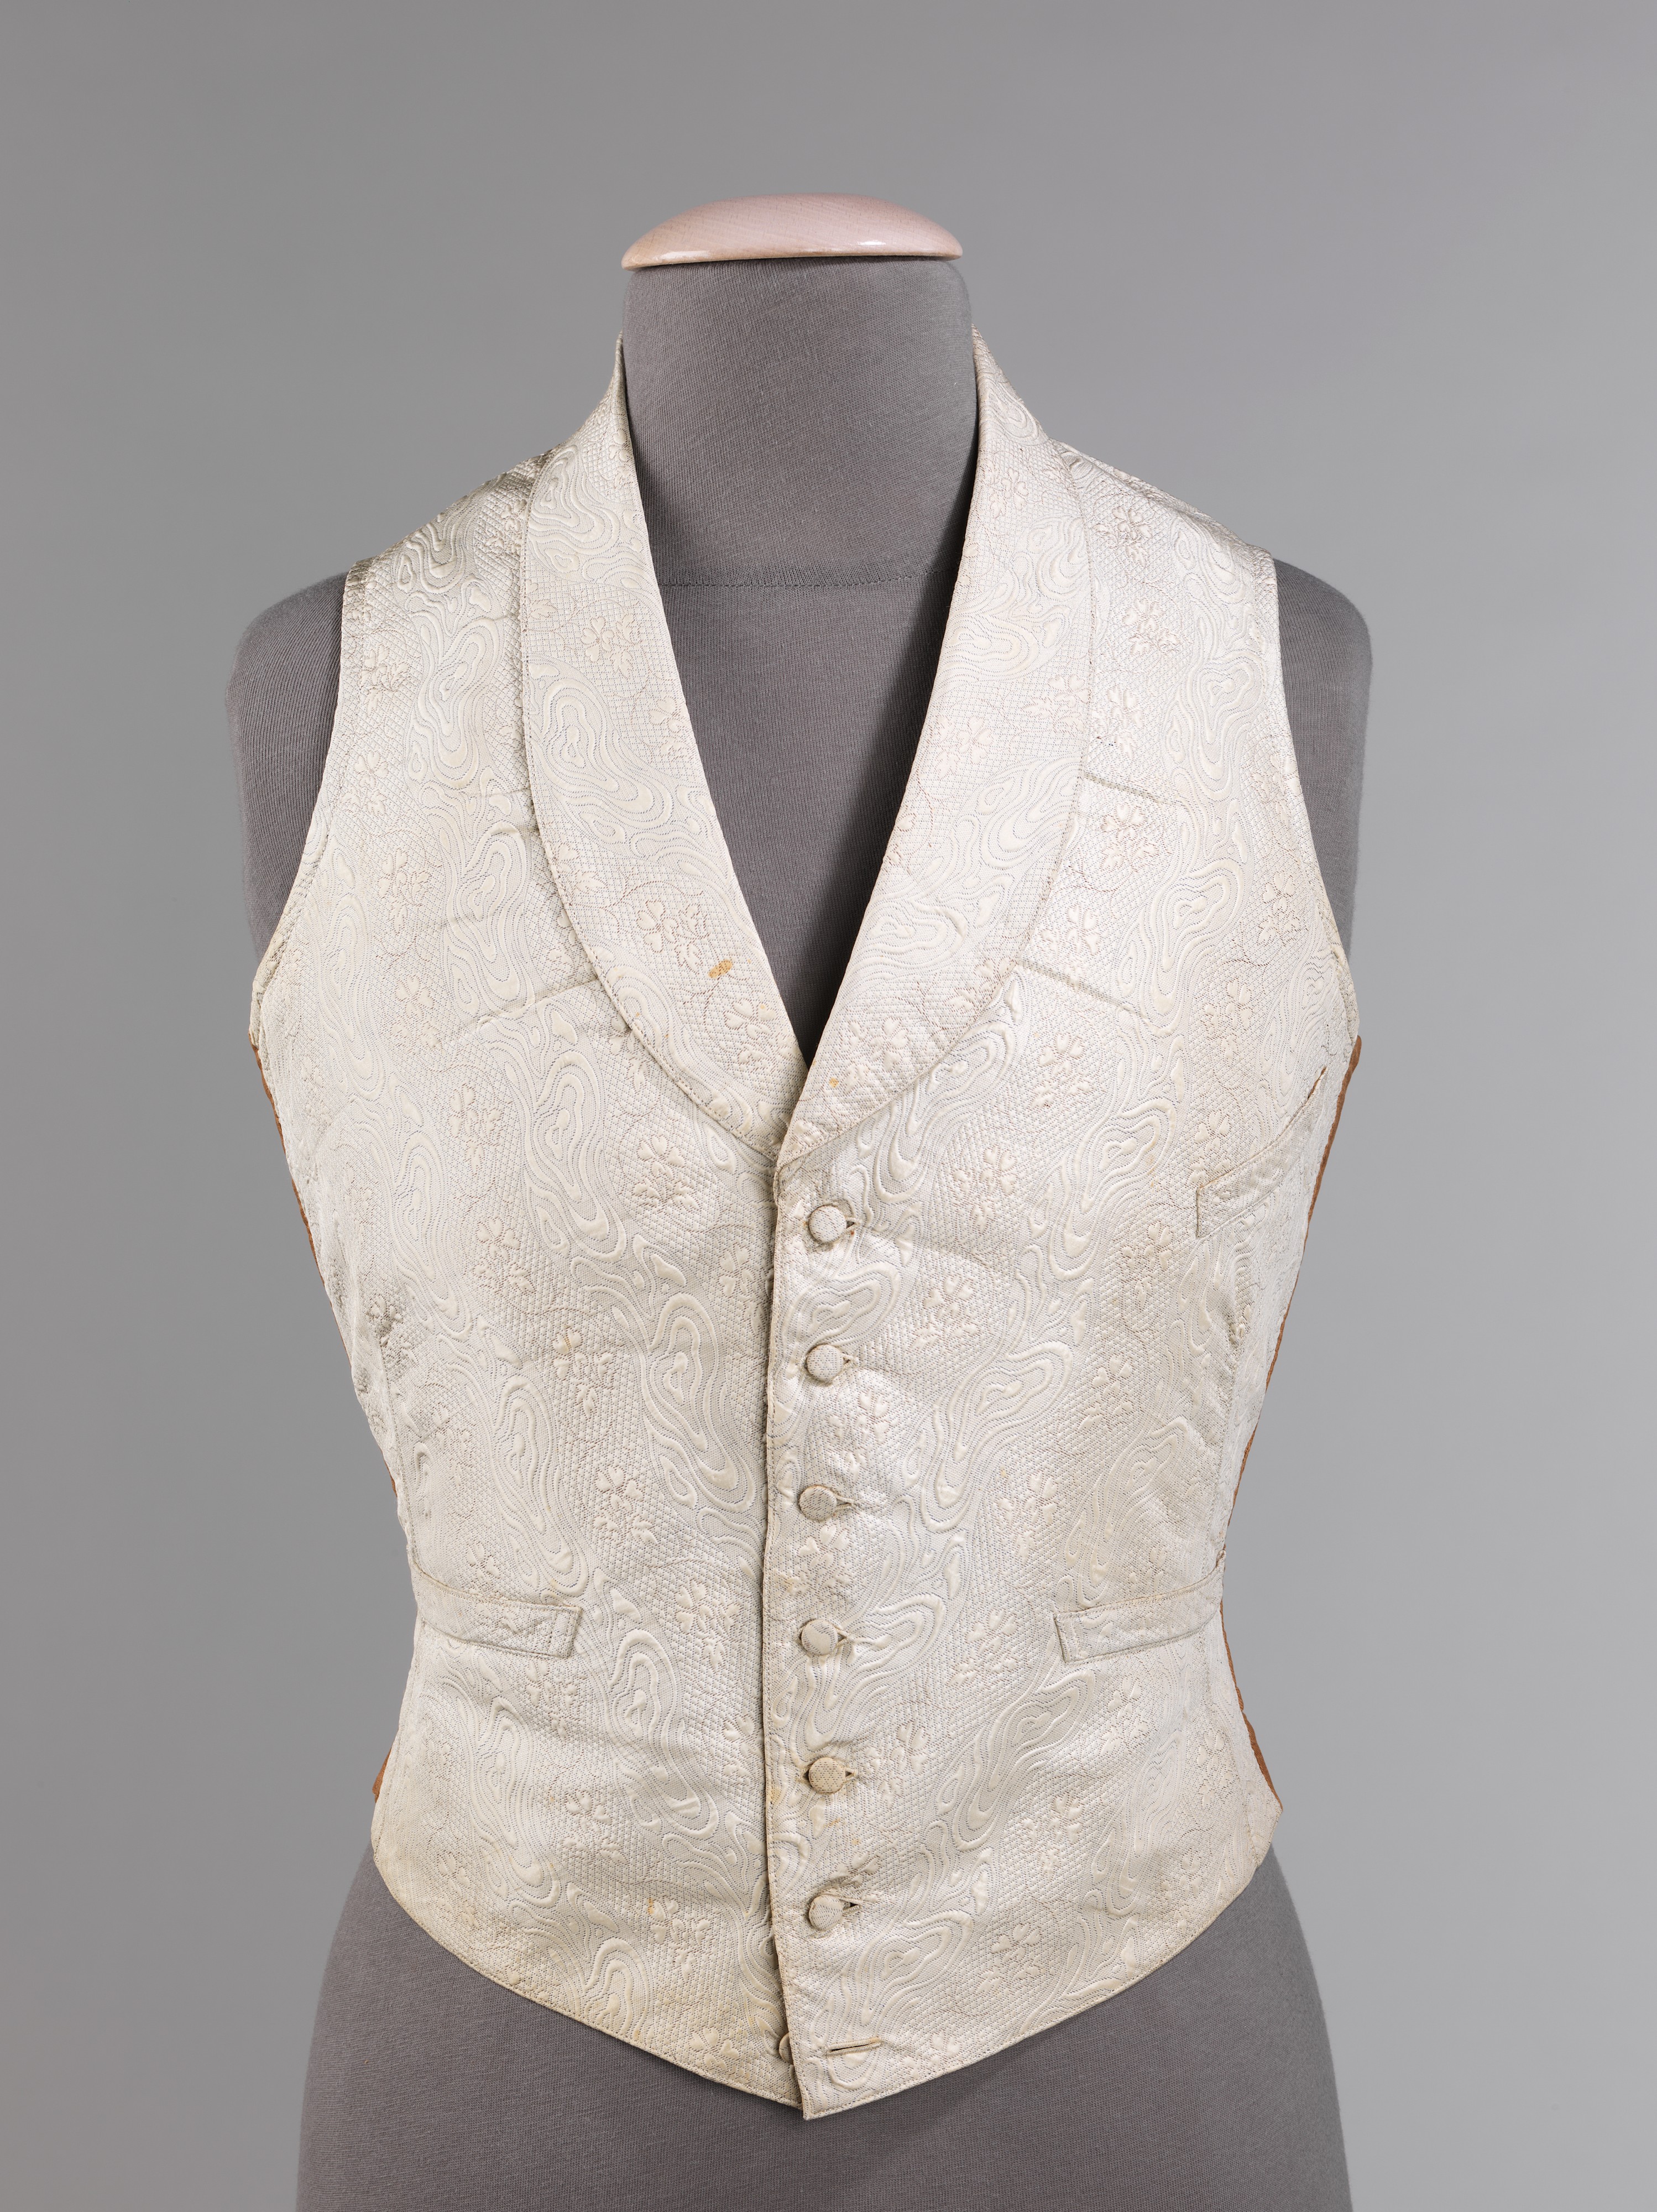 1850 55 Met Waistcoat Fashion Victorian Clothing